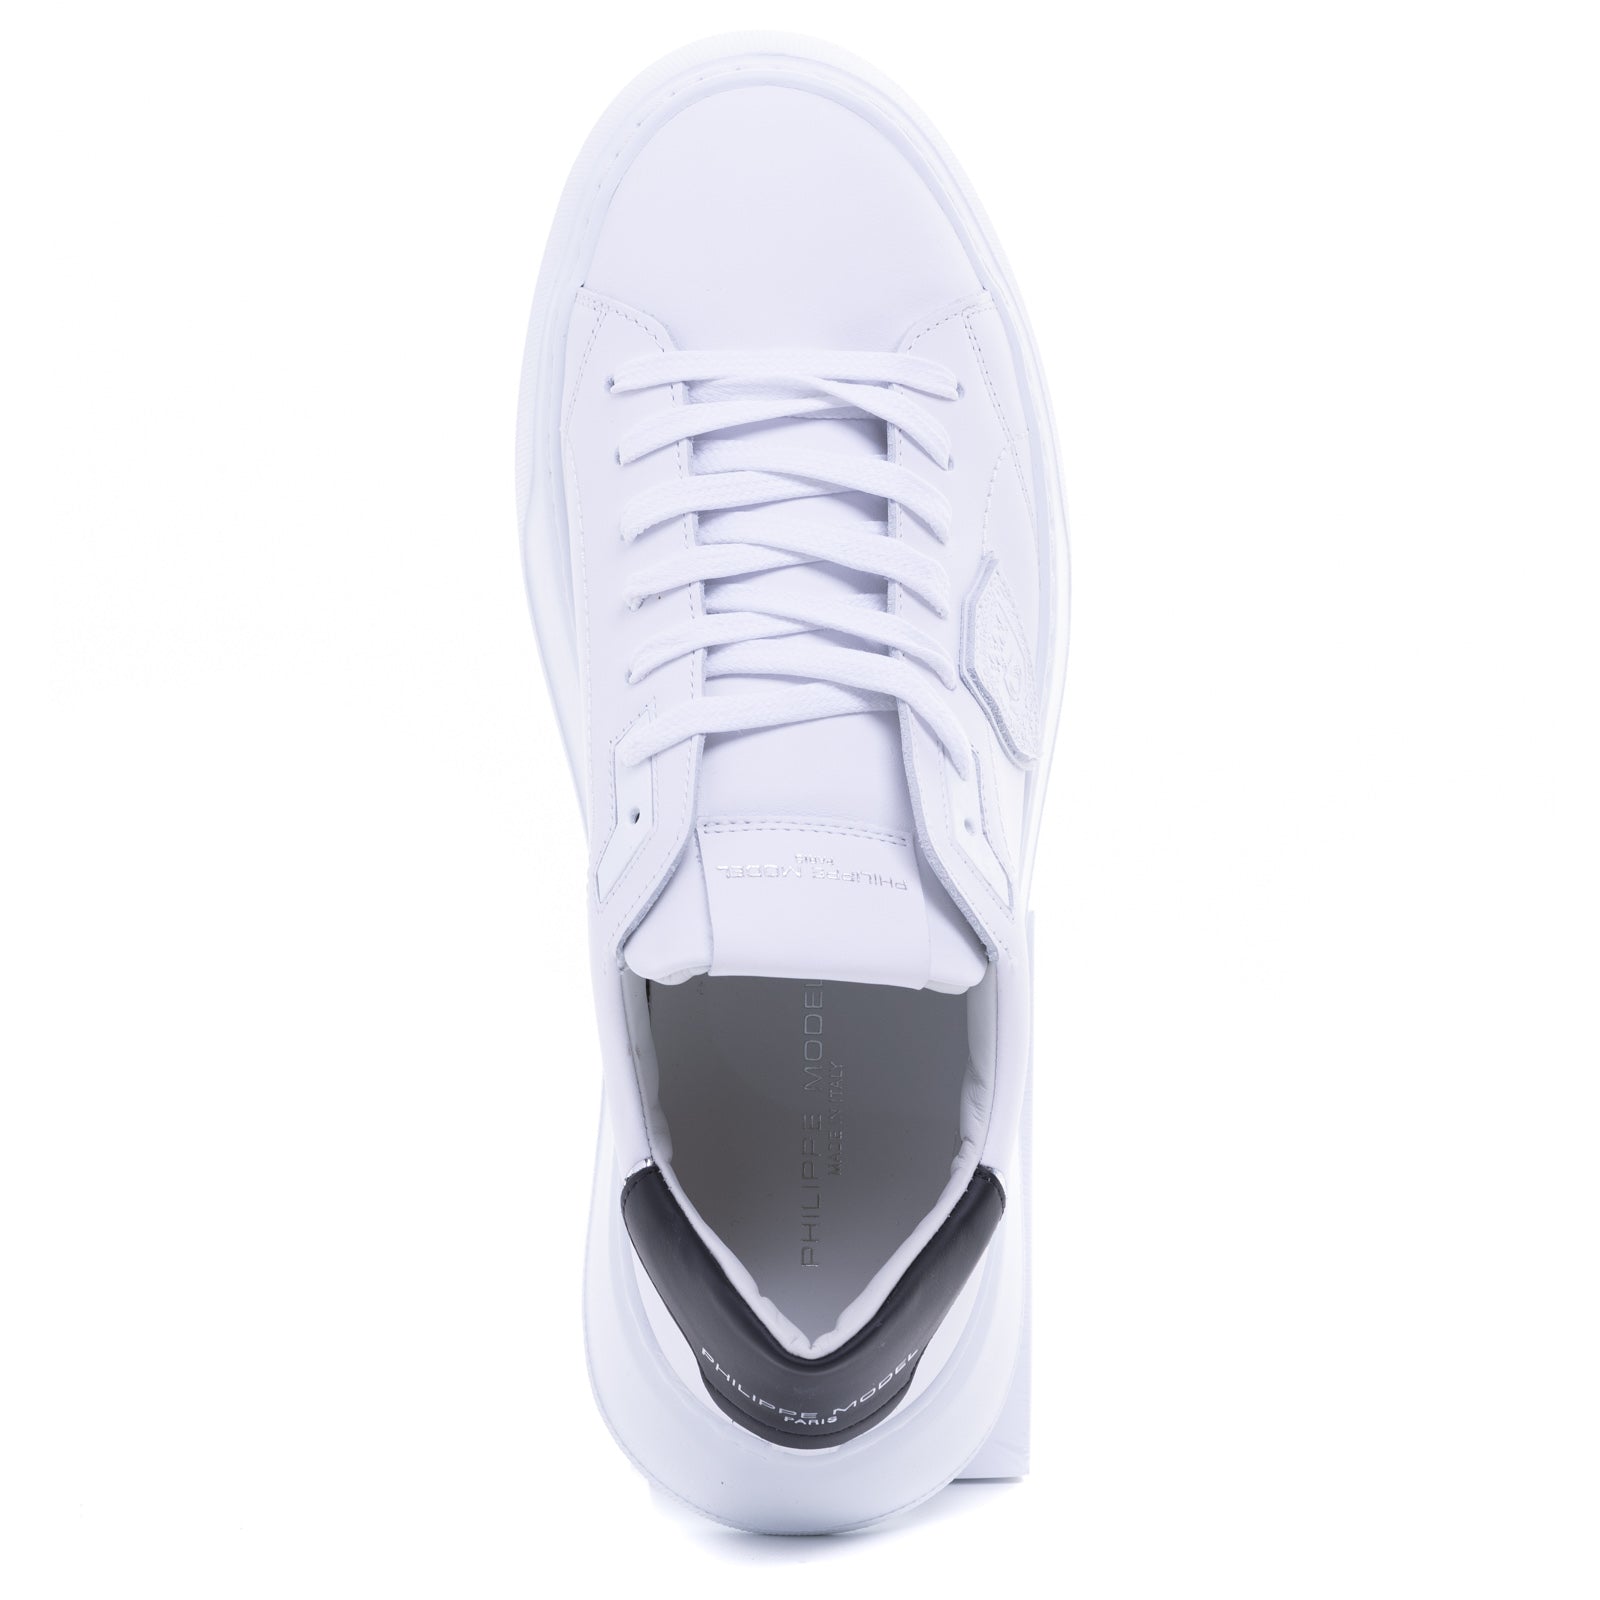 Sneakers PHILIPPE MODEL Temple low
Blanc noir